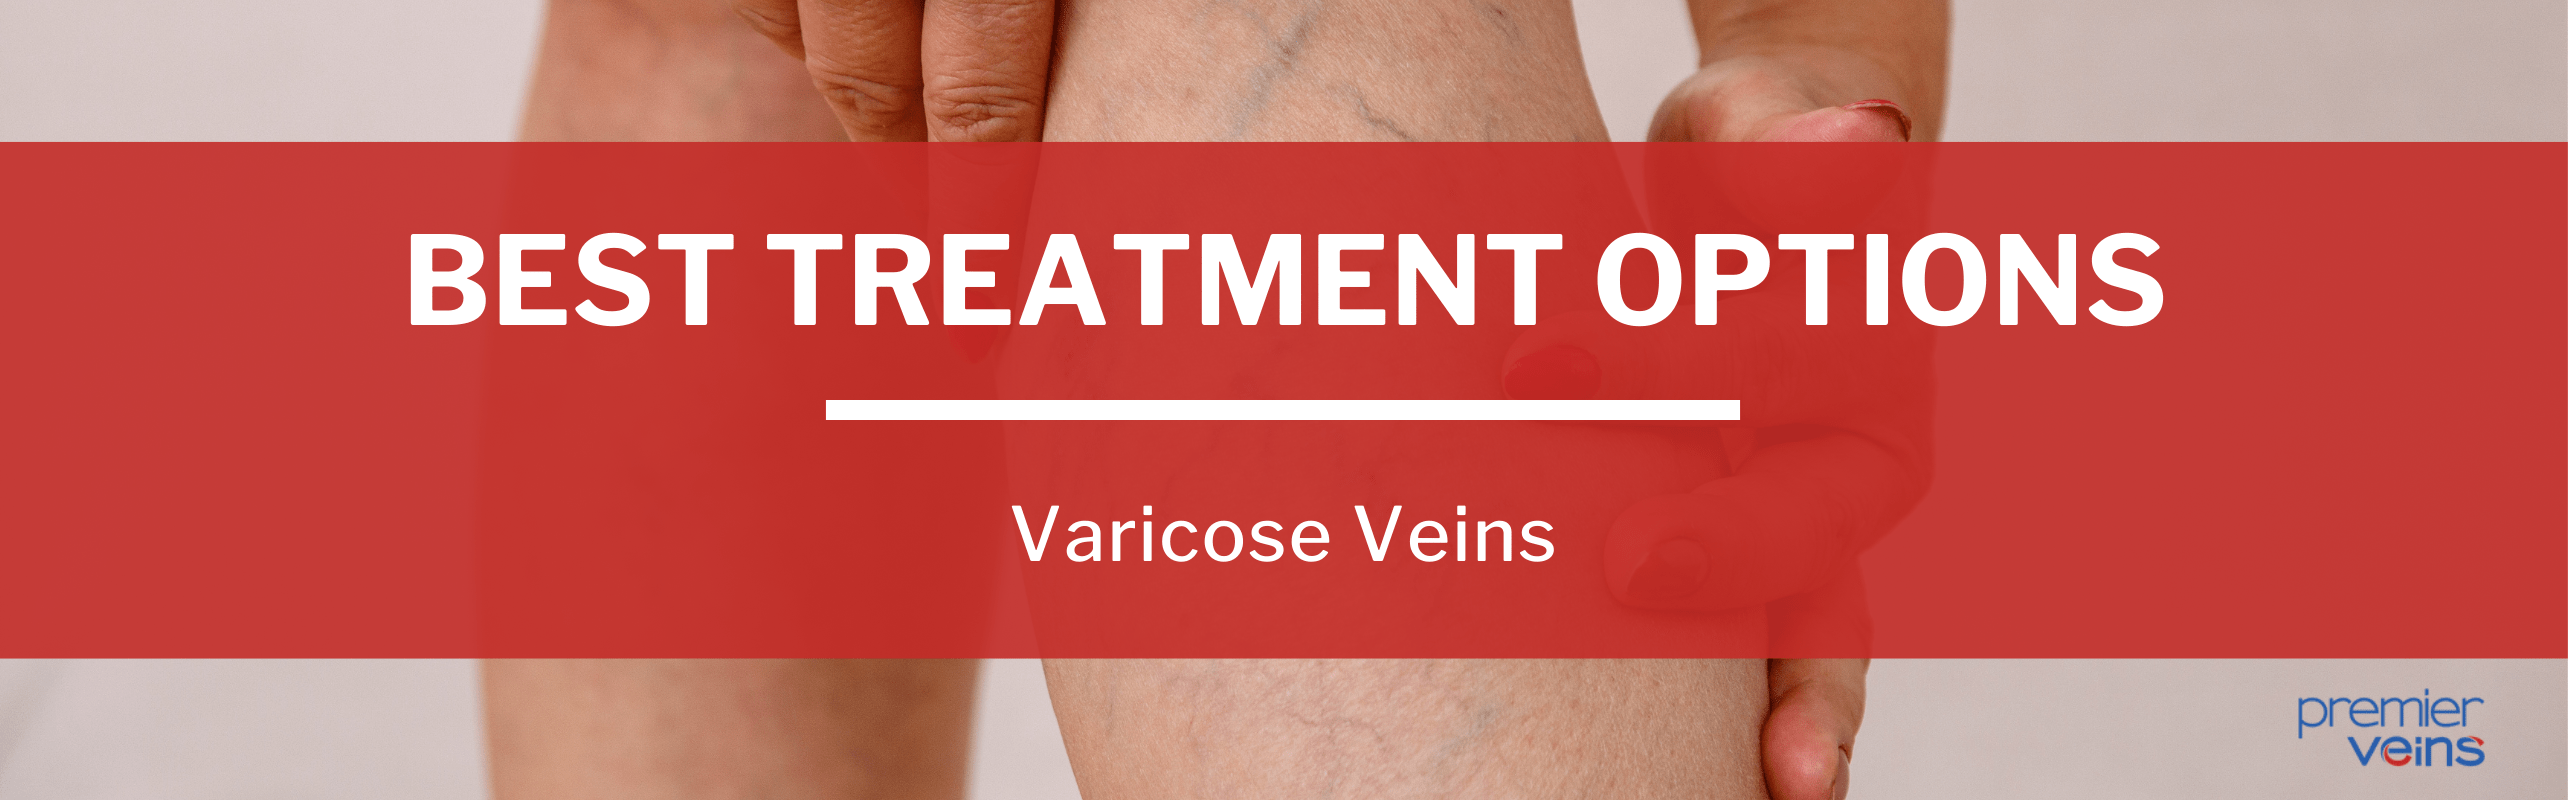 Best varicose vein treatment options